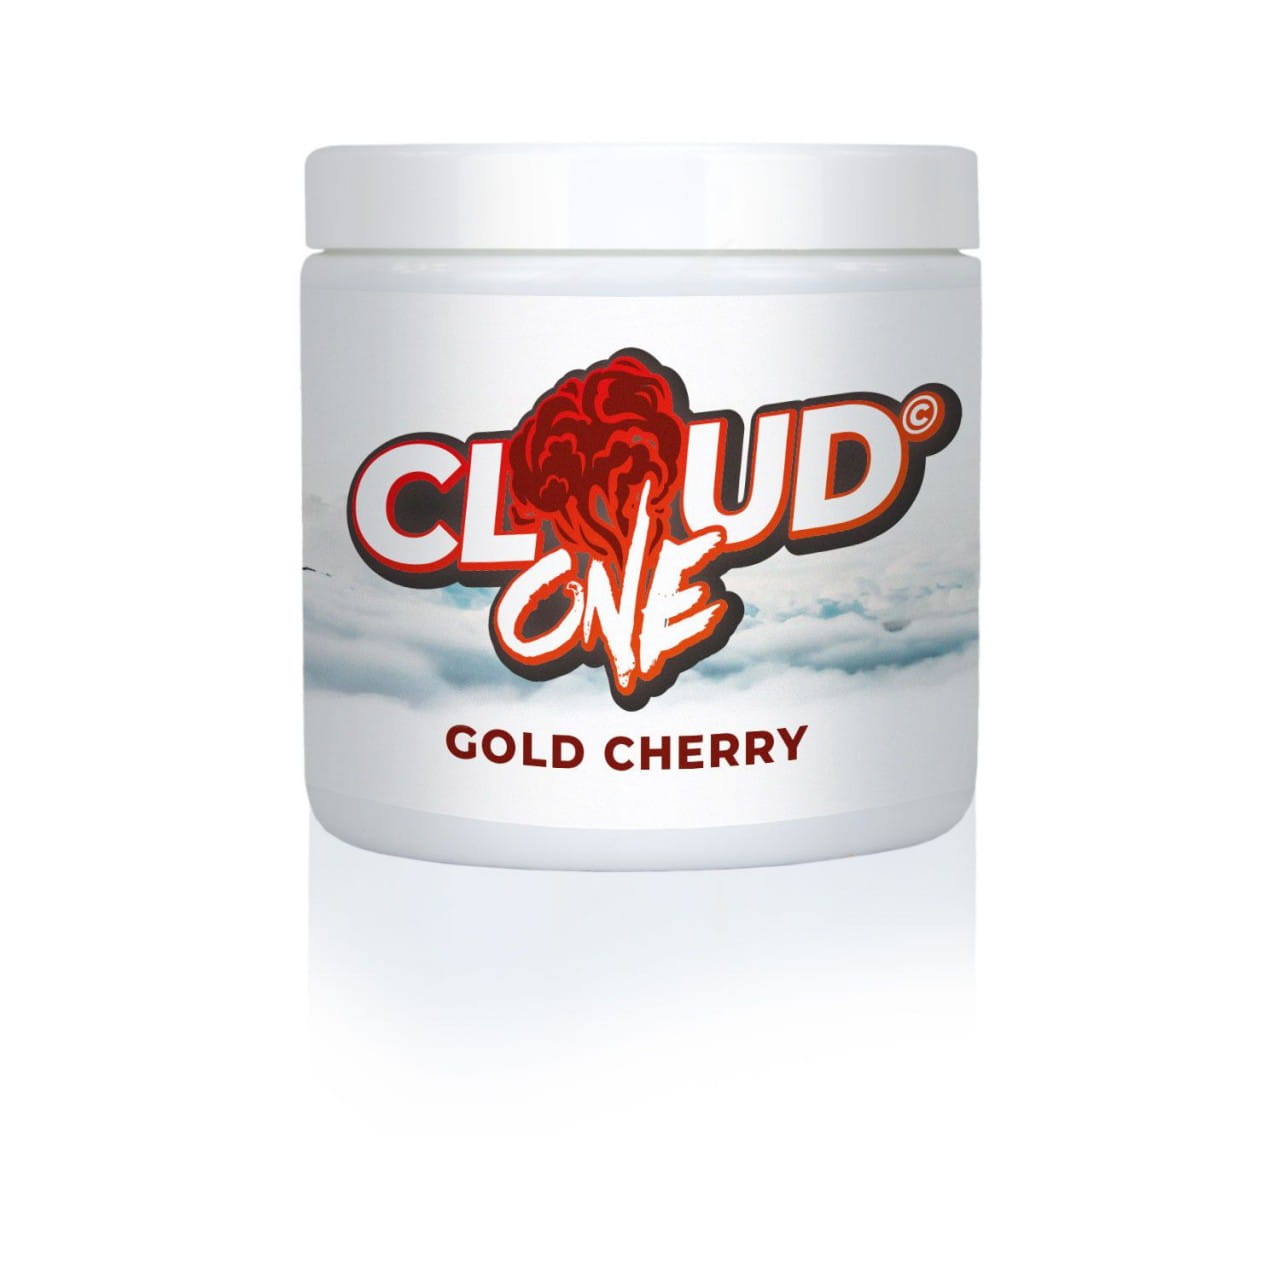 Cloud One - Gold Cherry 200 g unter ohne Angabe